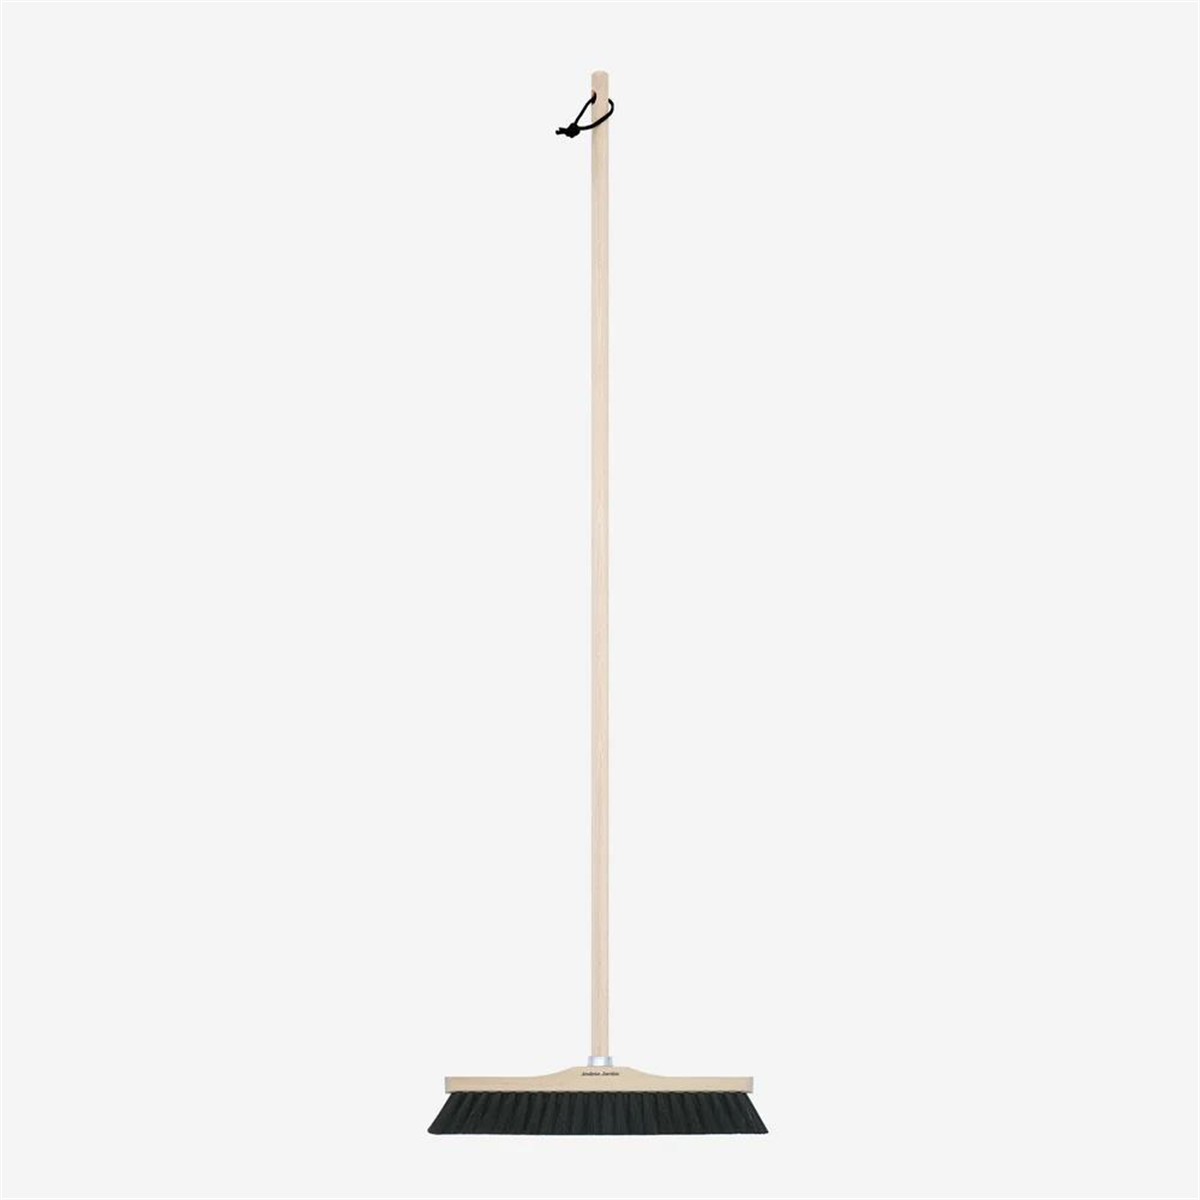 ANDREE JARDIN - Beech broom without handle - 43cm